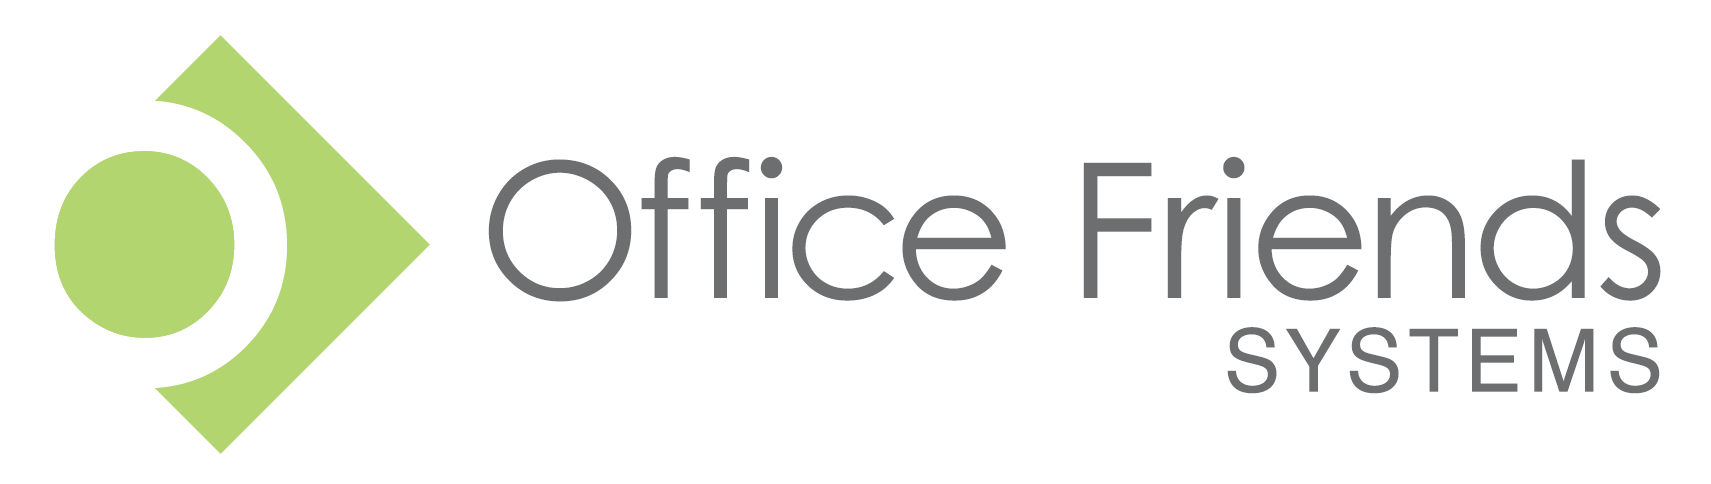 Office Friends Systems Ltd